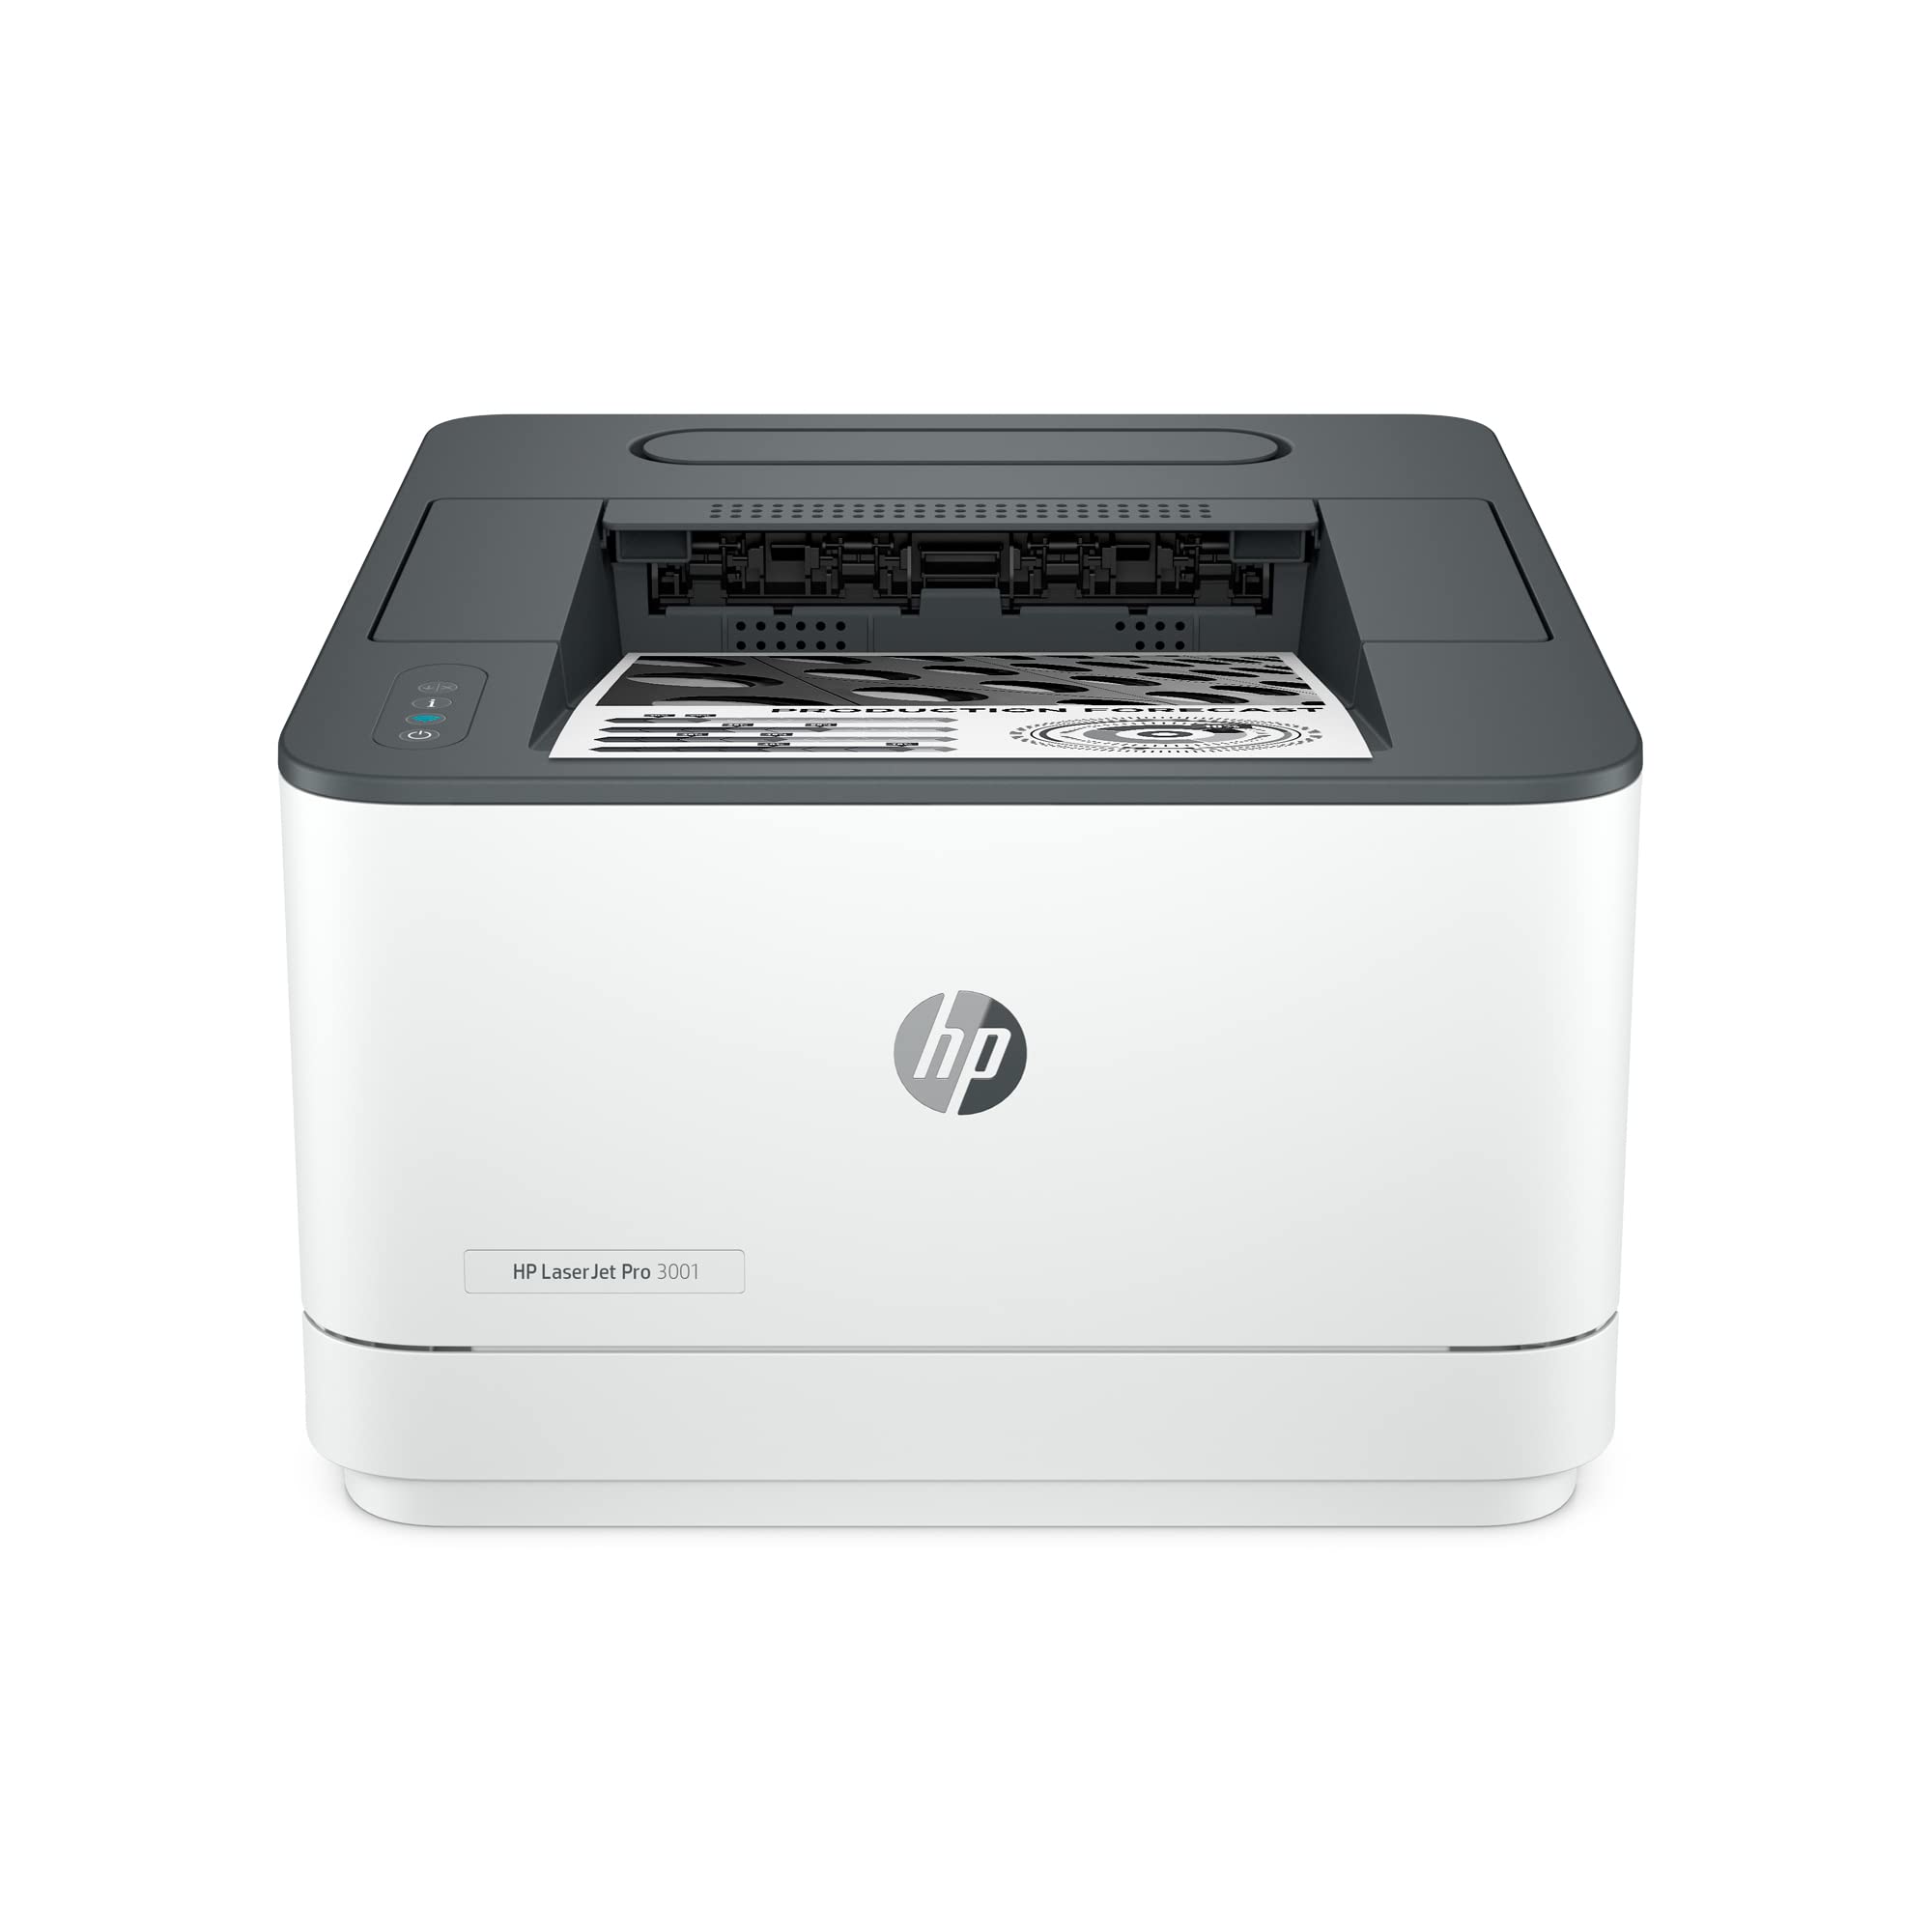 HP LaserJet Pro 3001dw impressora sem fio preto e branco